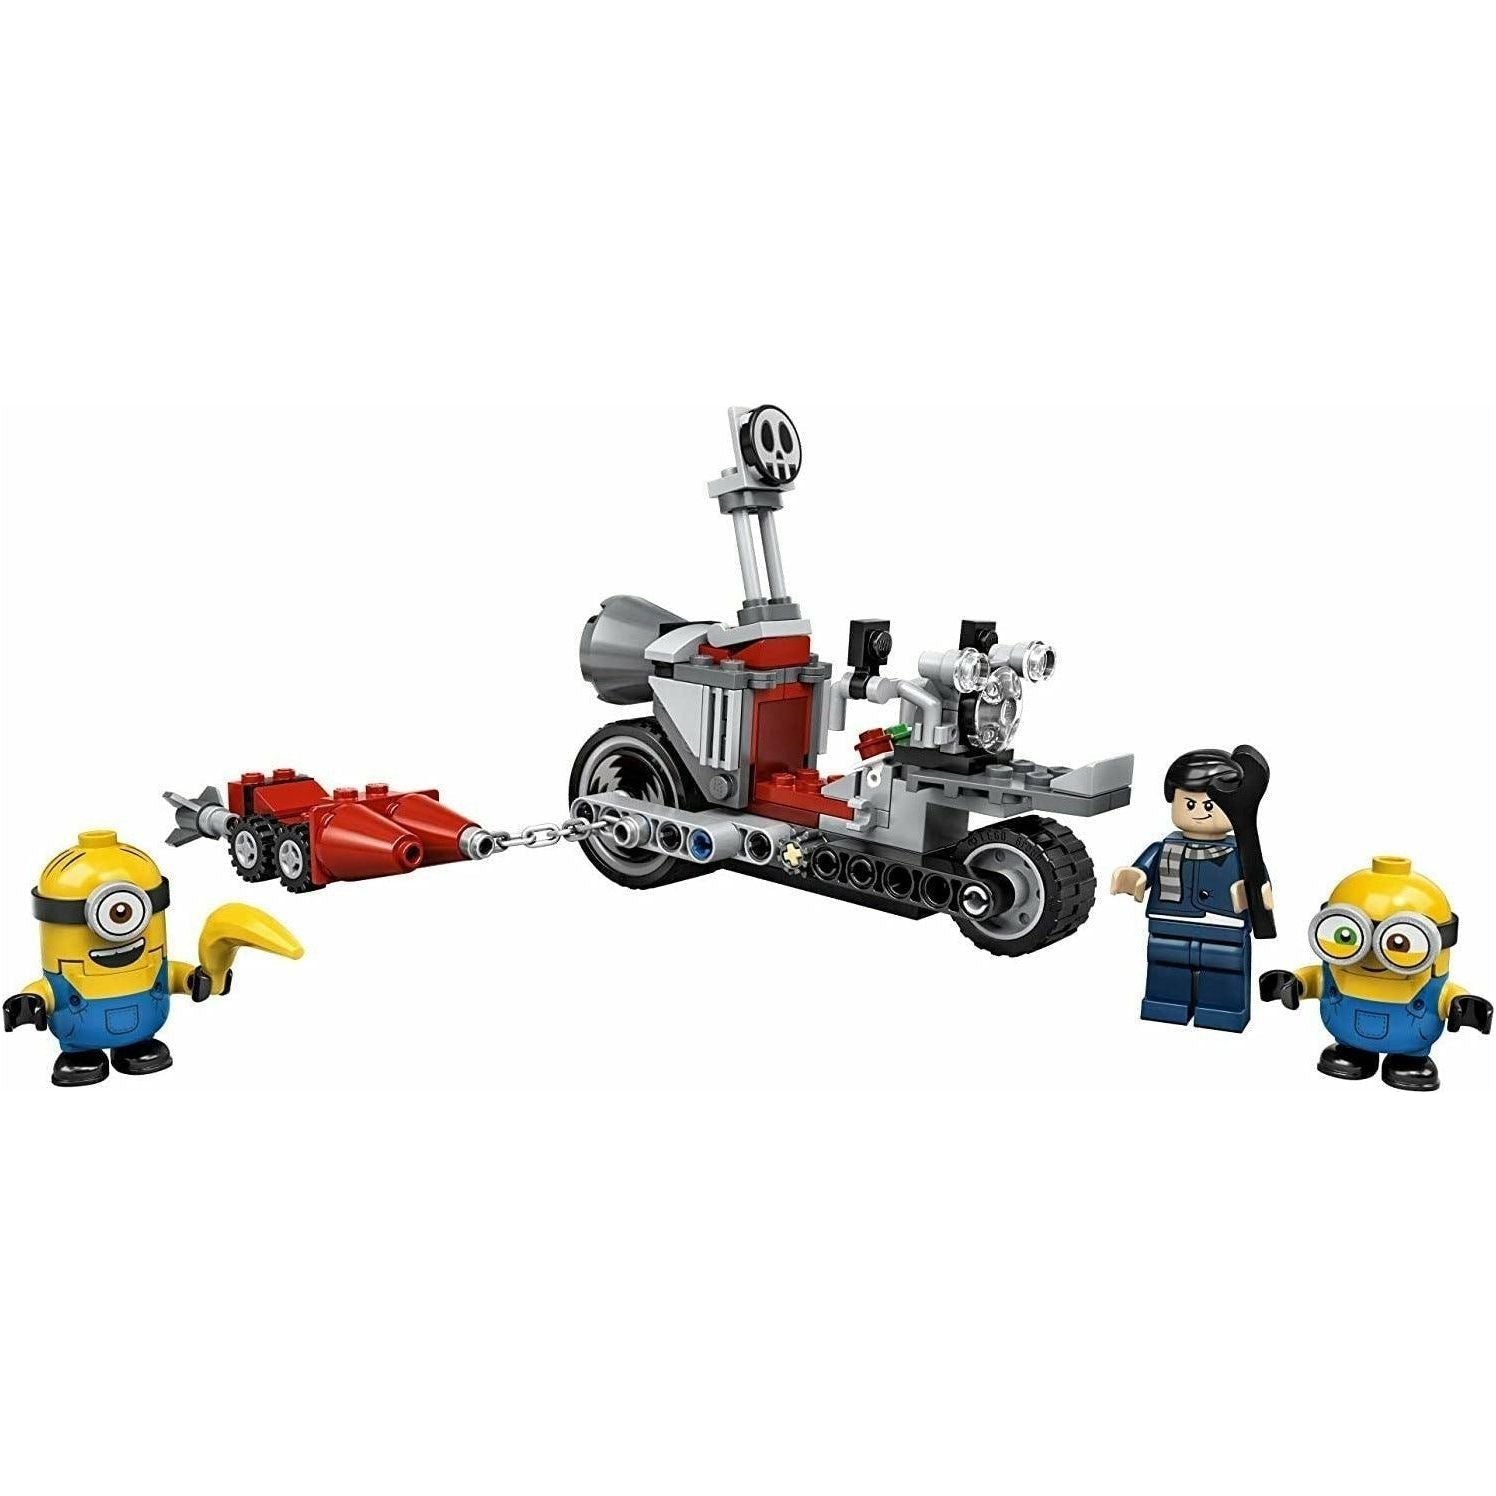 LEGO 75549 Minions Unstoppable Bike Chase With Bob, Stuart & Gru Minion Figures 136 Pieces - BumbleToys - 6+ Years, Boys, LEGO, Minions, OXE, Pre-Order